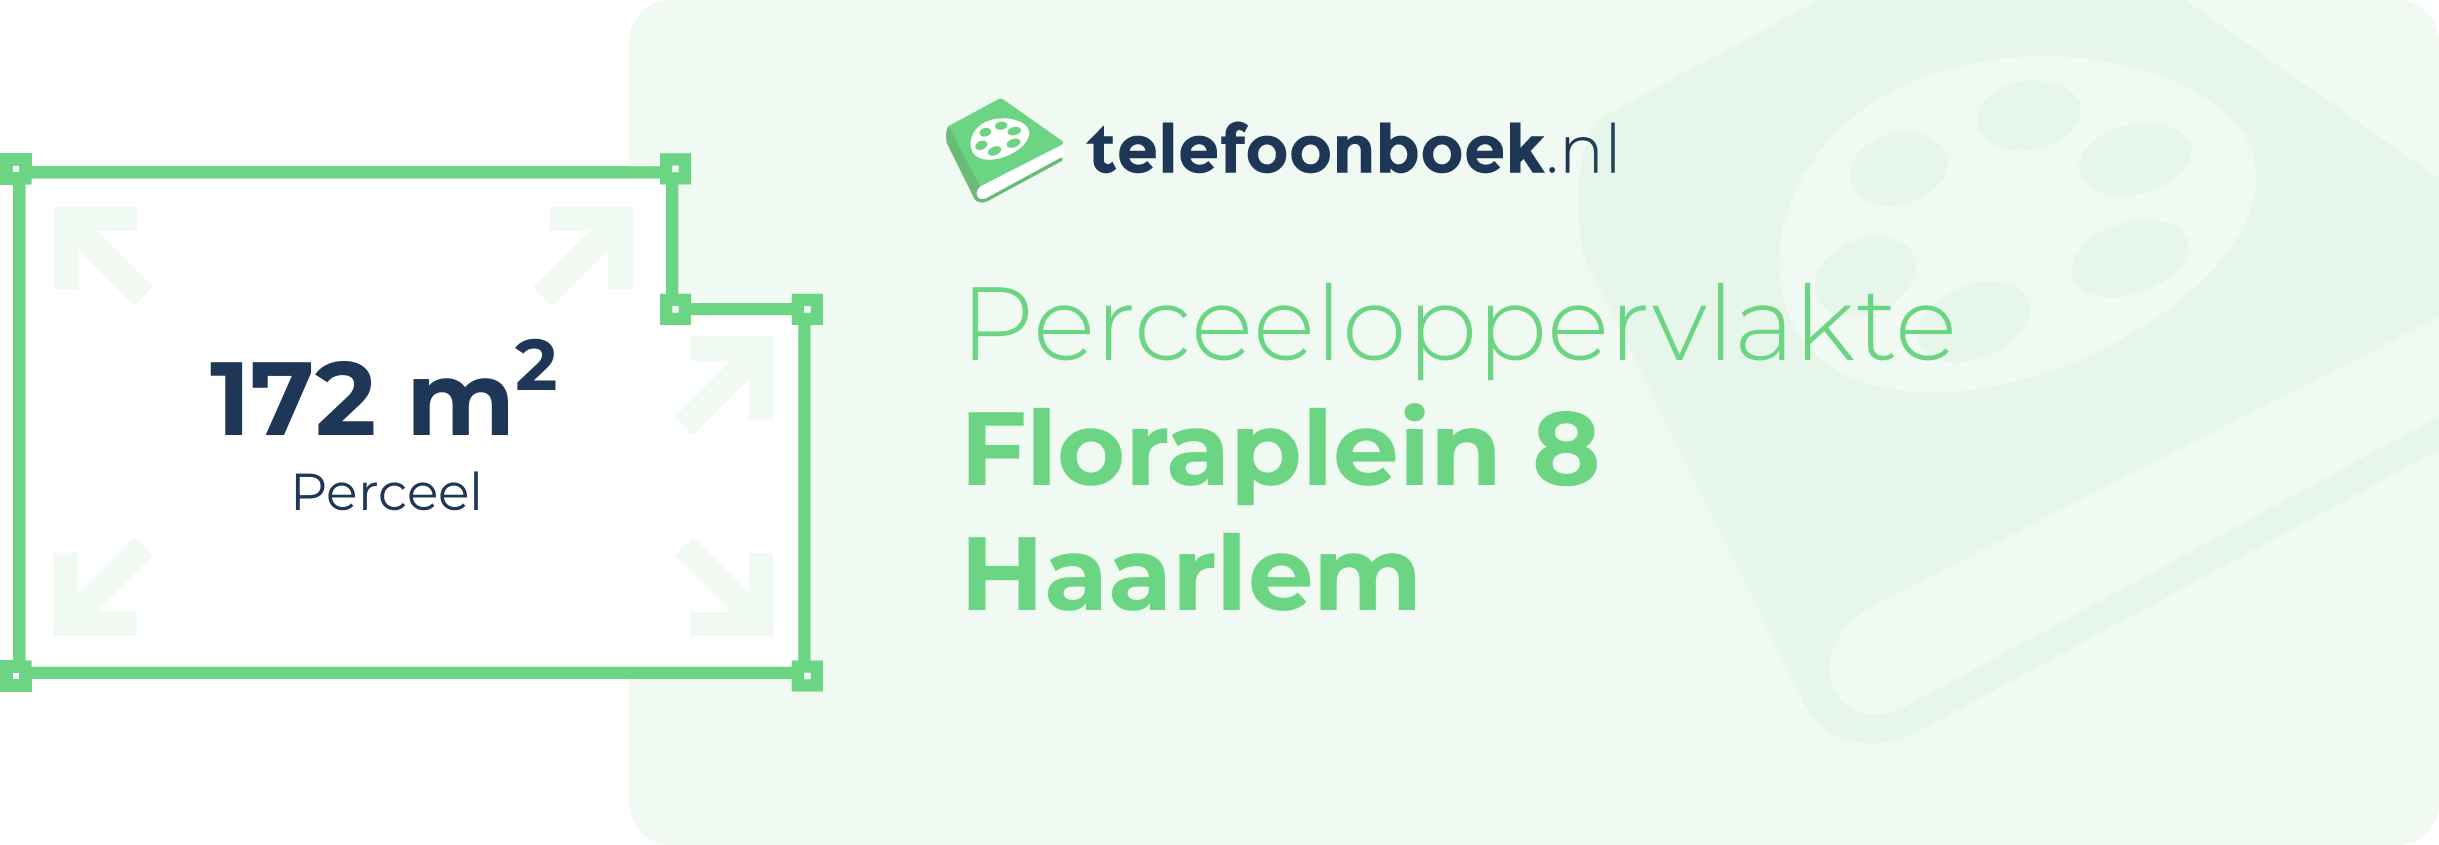 Perceeloppervlakte Floraplein 8 Haarlem